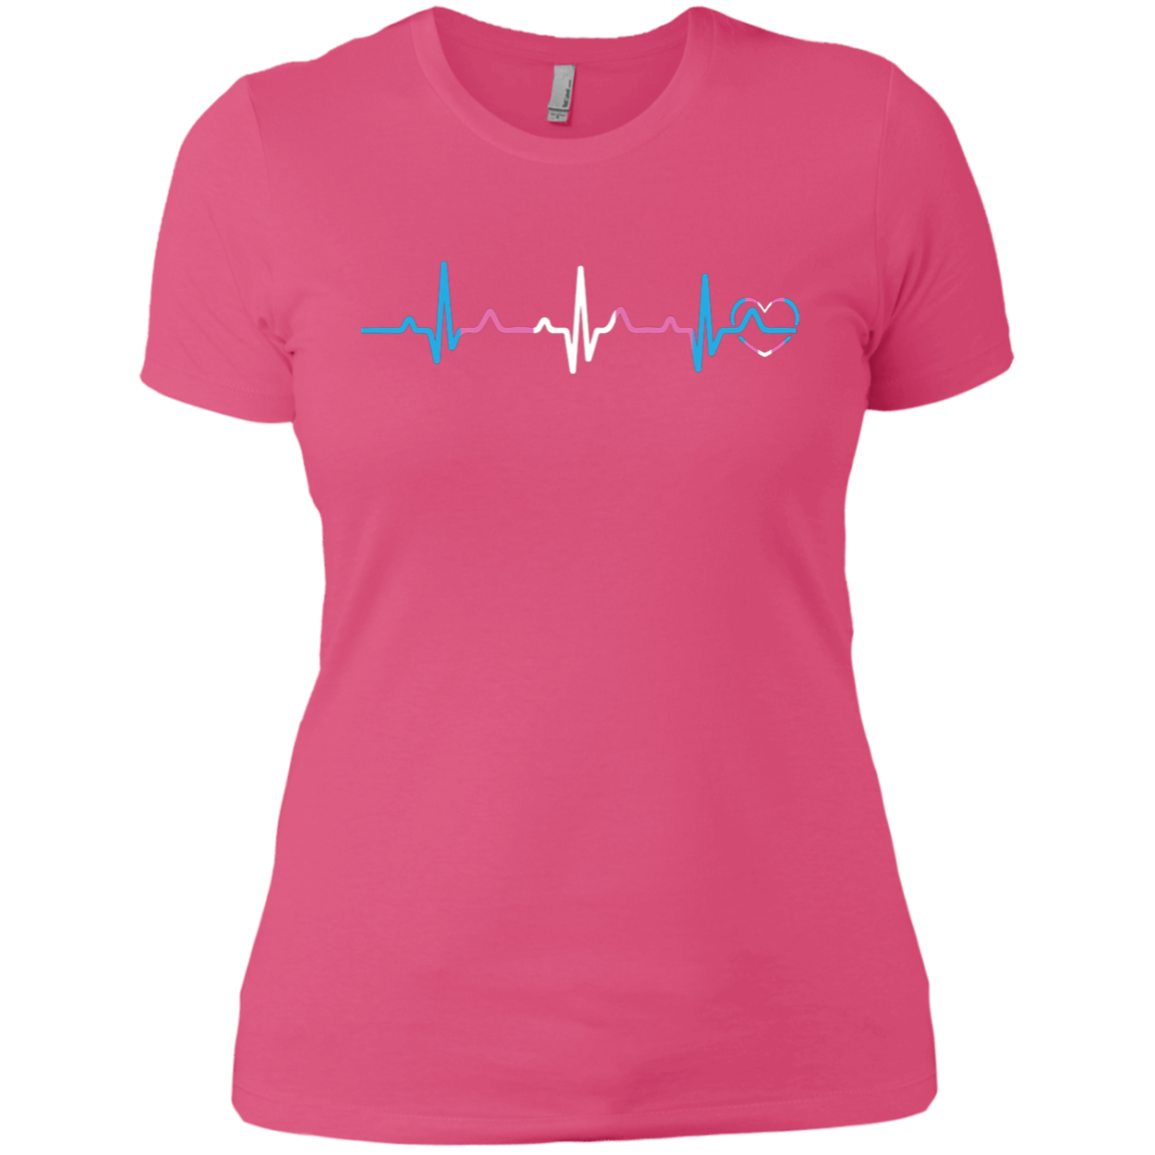 Trans Pride Heartbeat pink tshirt for women